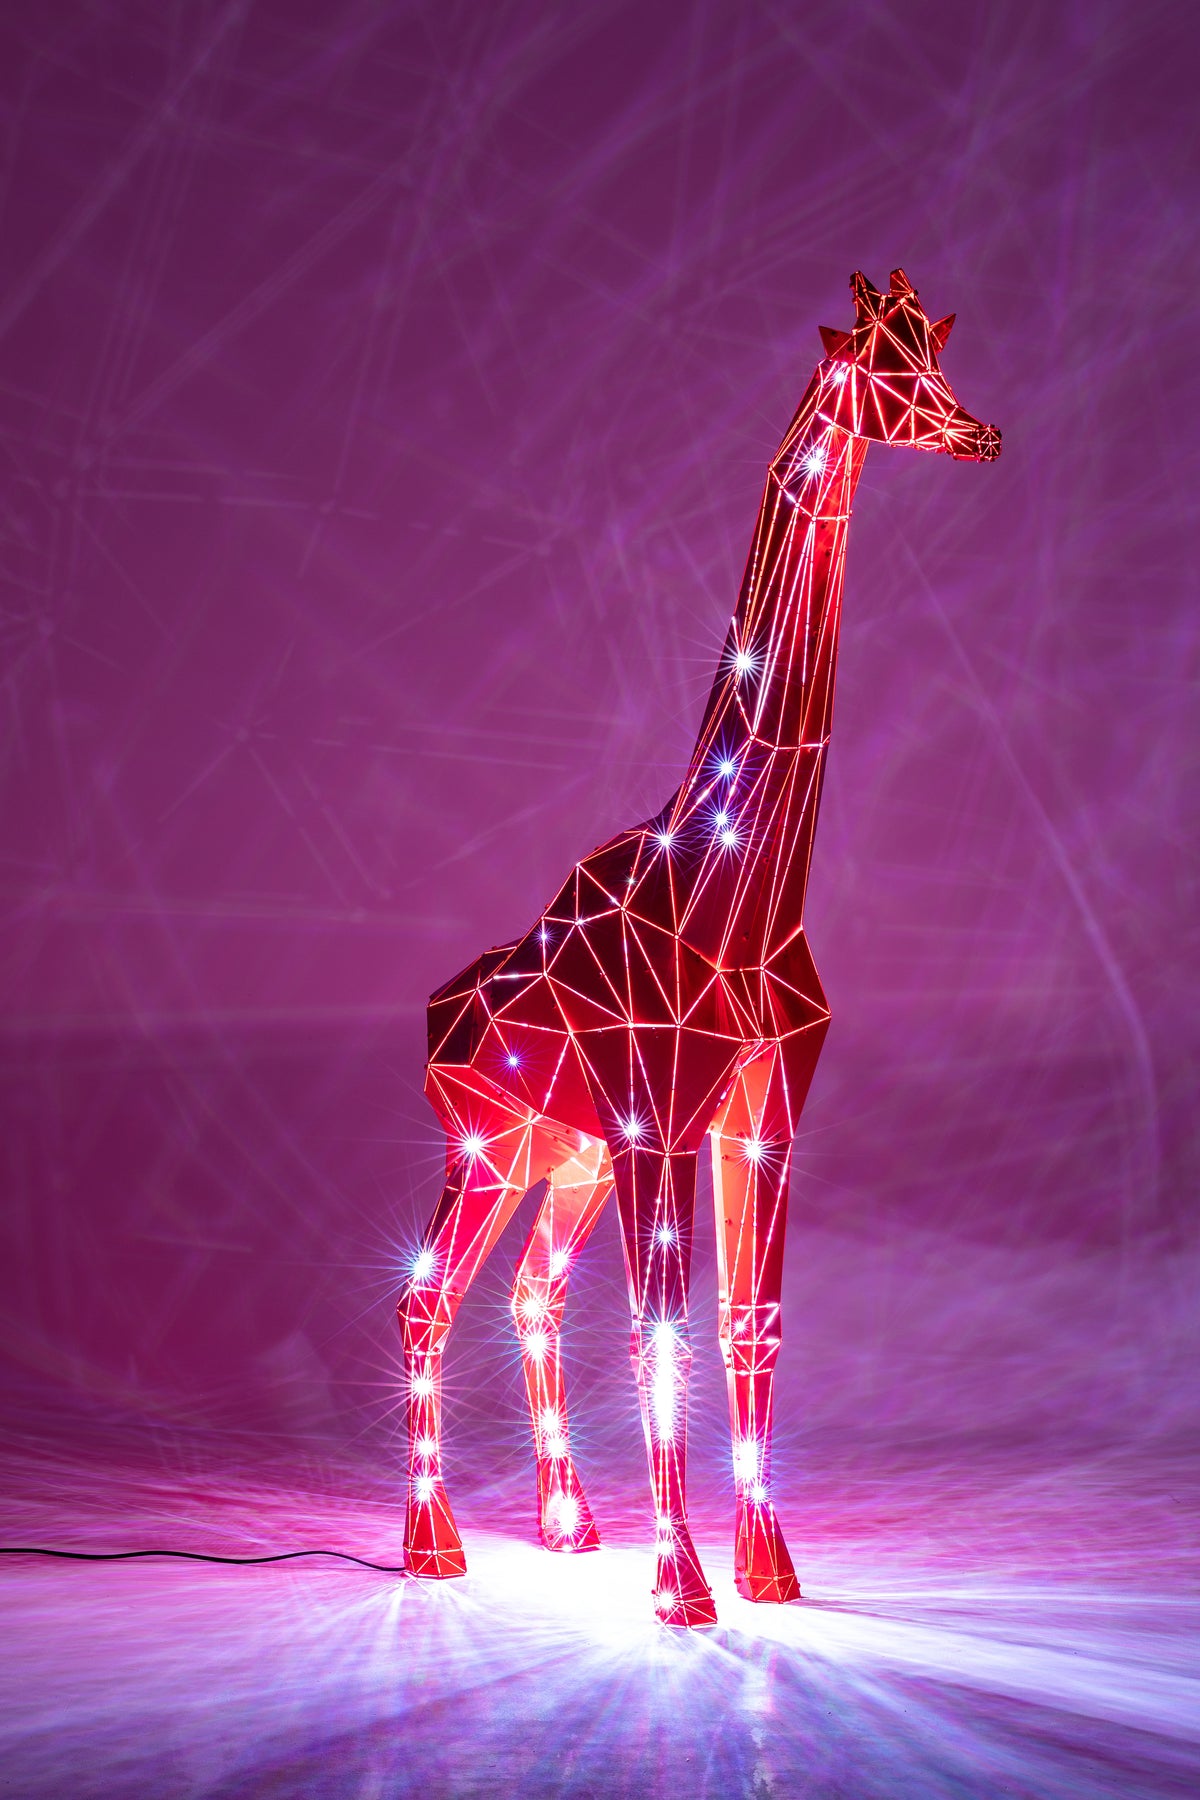 Giraffe with Bouffee control - remote Cloud